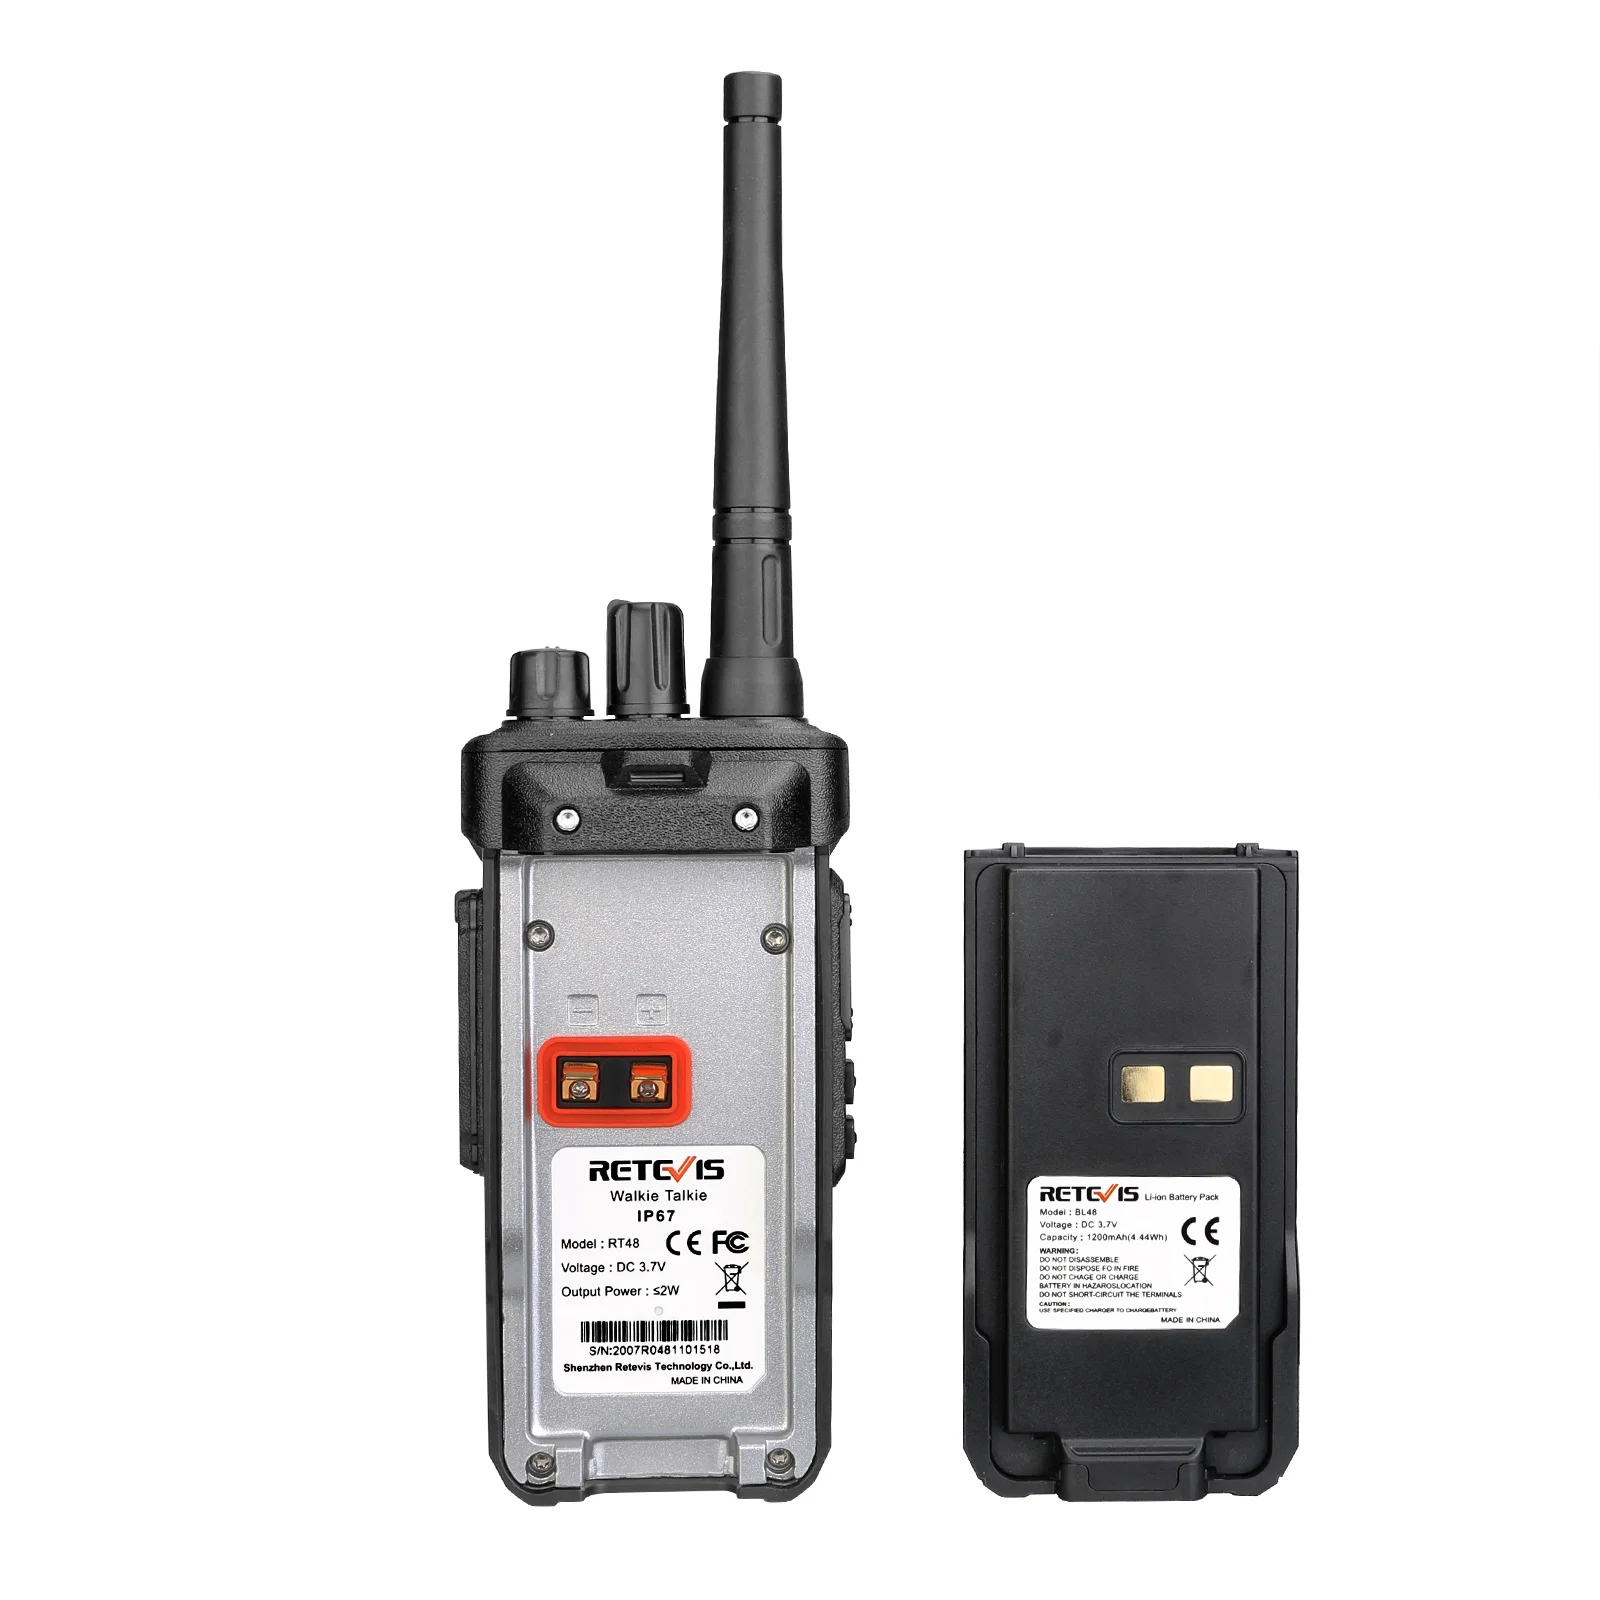 Wholesale RETEVIS RT48 IP67 Waterproof FRS Walkie Talkie 2W UHF  License-free Handheld Two Way Ham Radio Transceiver VOX Scrambler USB From 